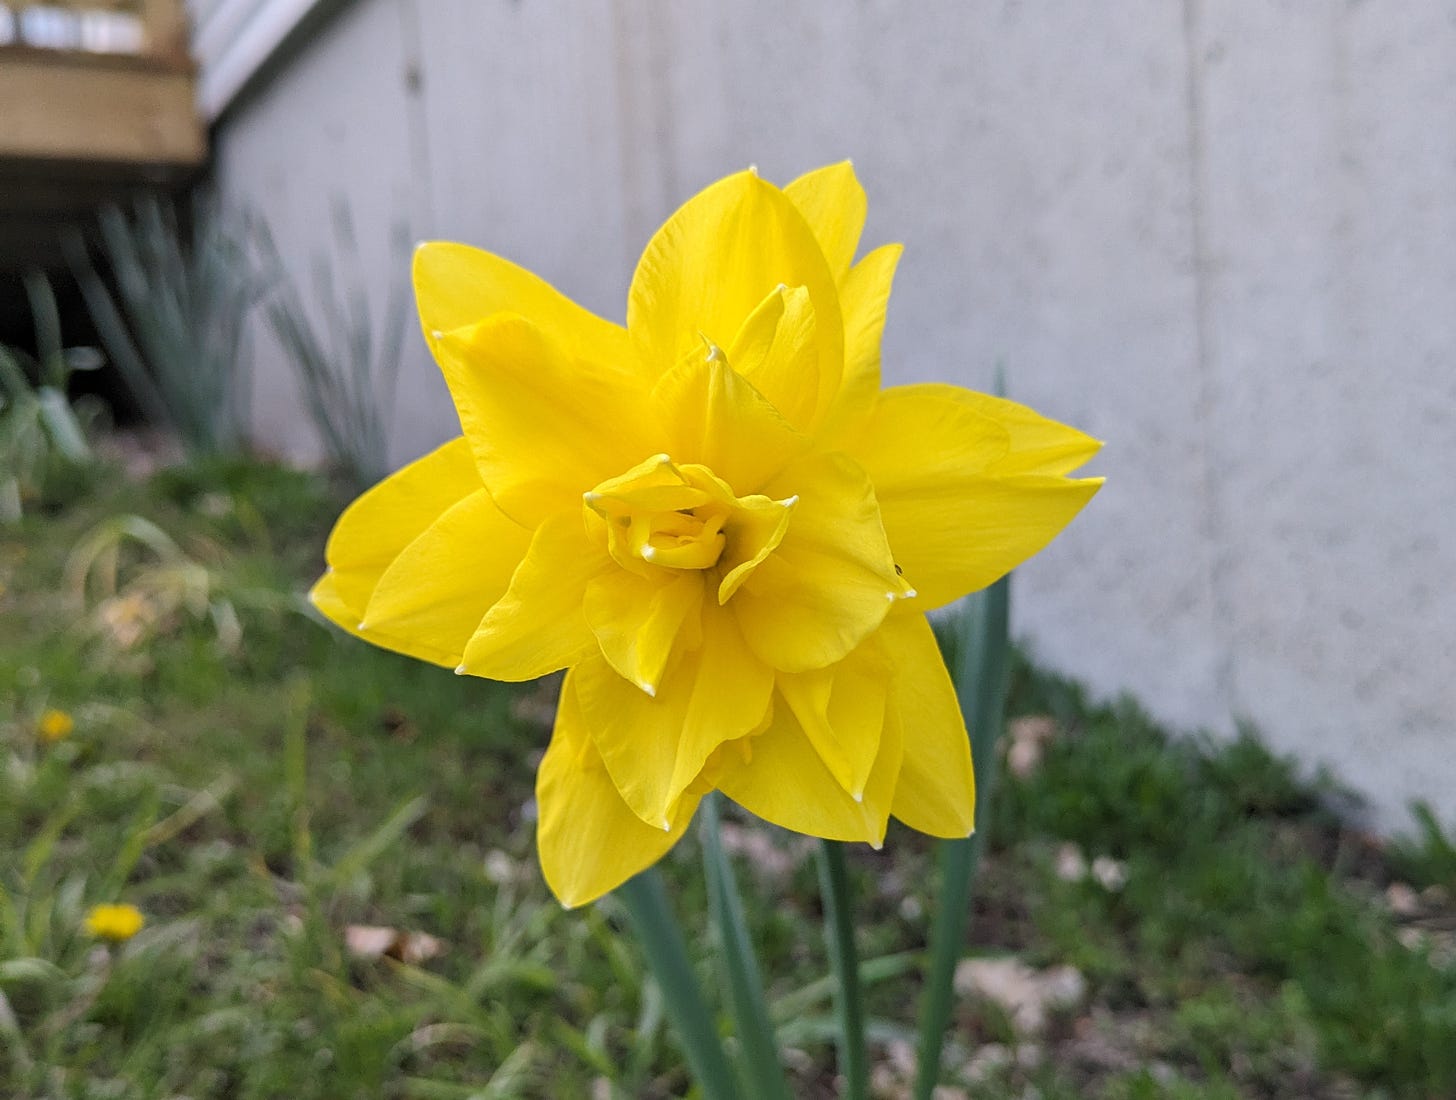 Portrait photo of a daffodil